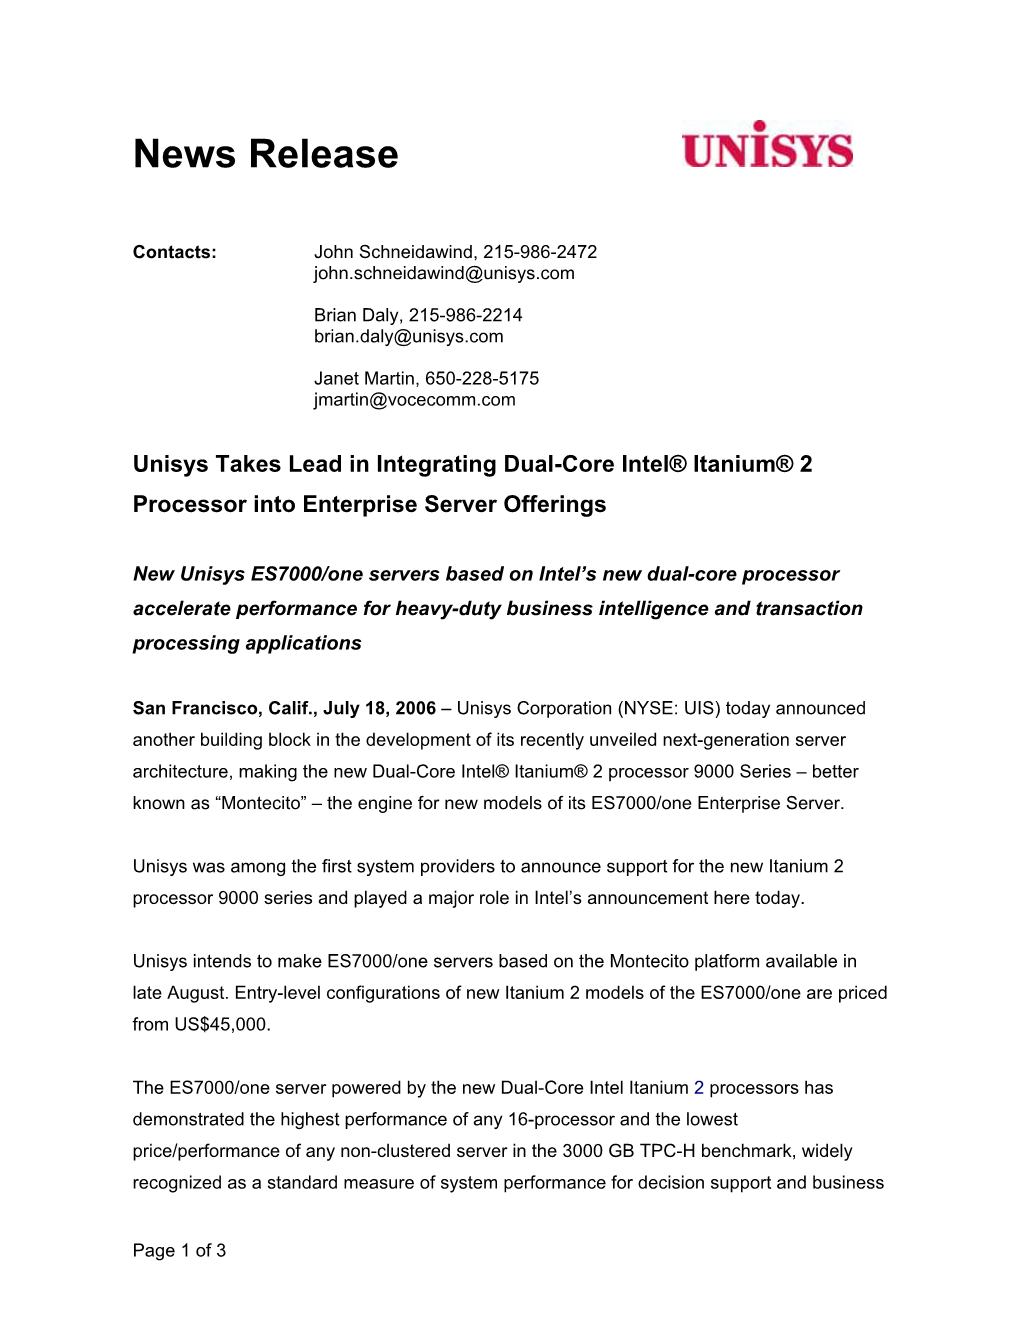 Unisys Takes Lead in Integrating Dual-Core Intel® Itanium® 2 Processor Into Enterprise Server Offerings